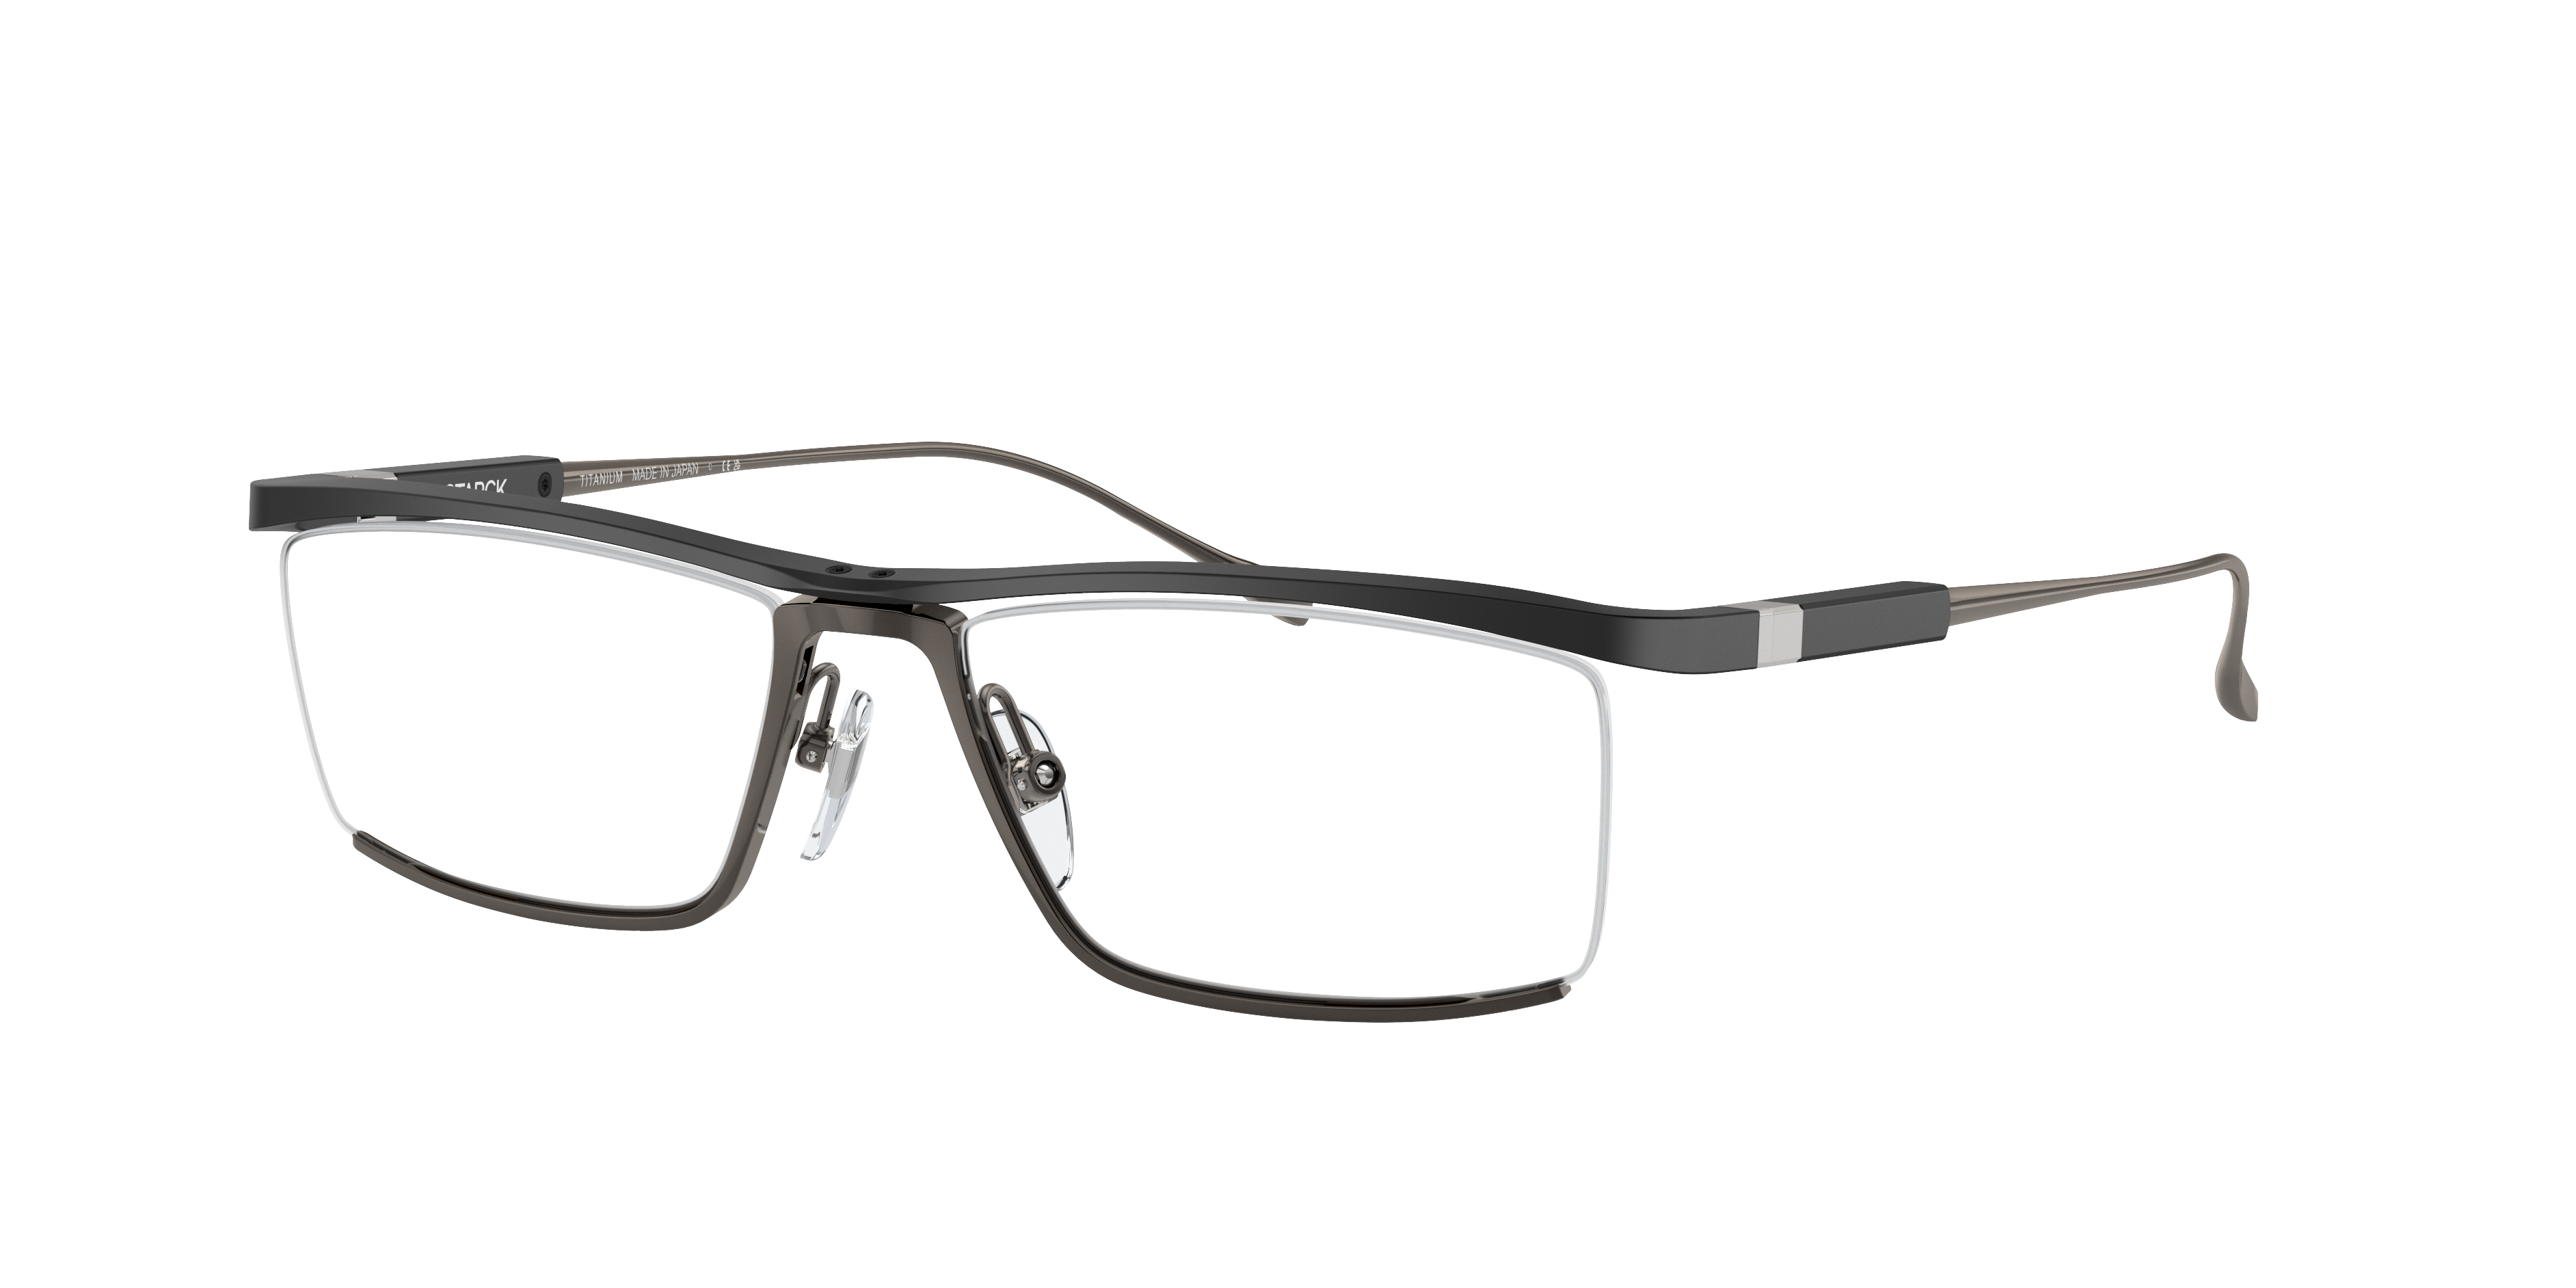 Starck SH2081 Eyeglasses | LensCrafters